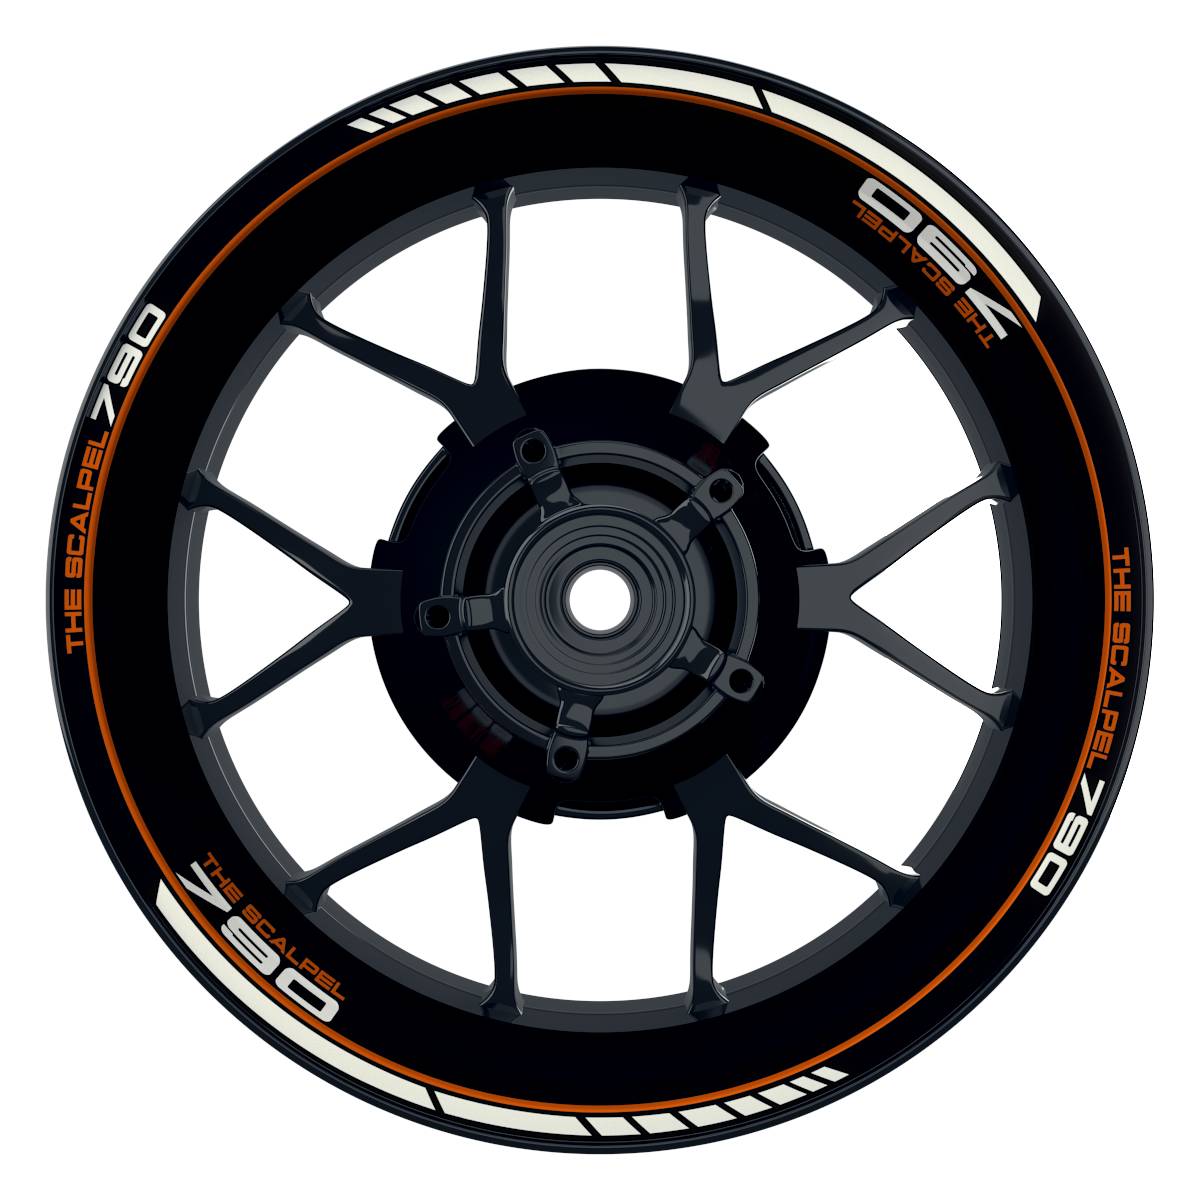 THE SCALPEL 790 Clean schwarz orange Wheelsticker Felgenaufkleber